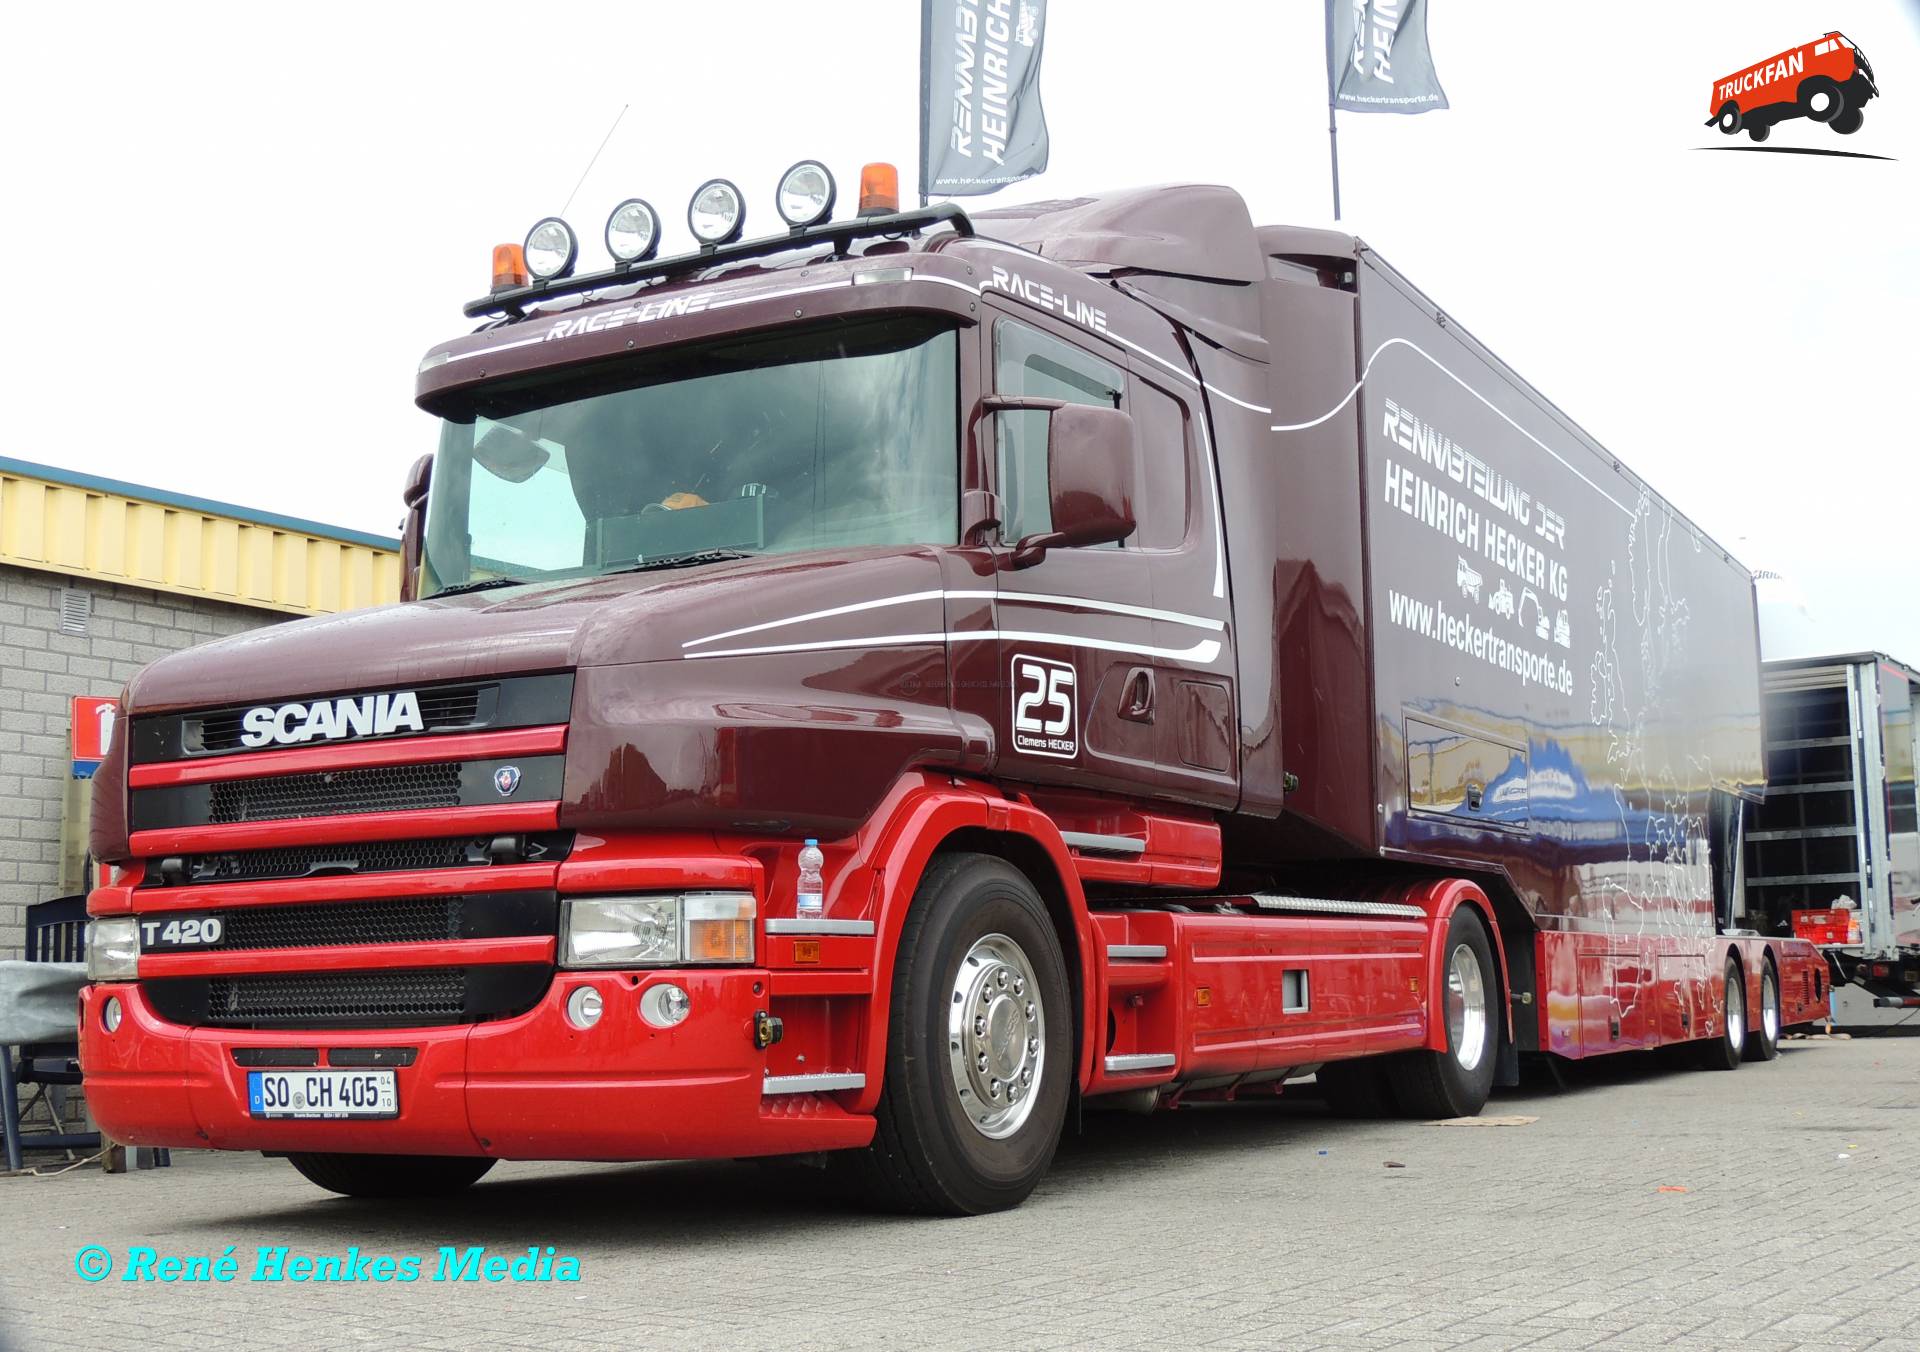 Scania T420